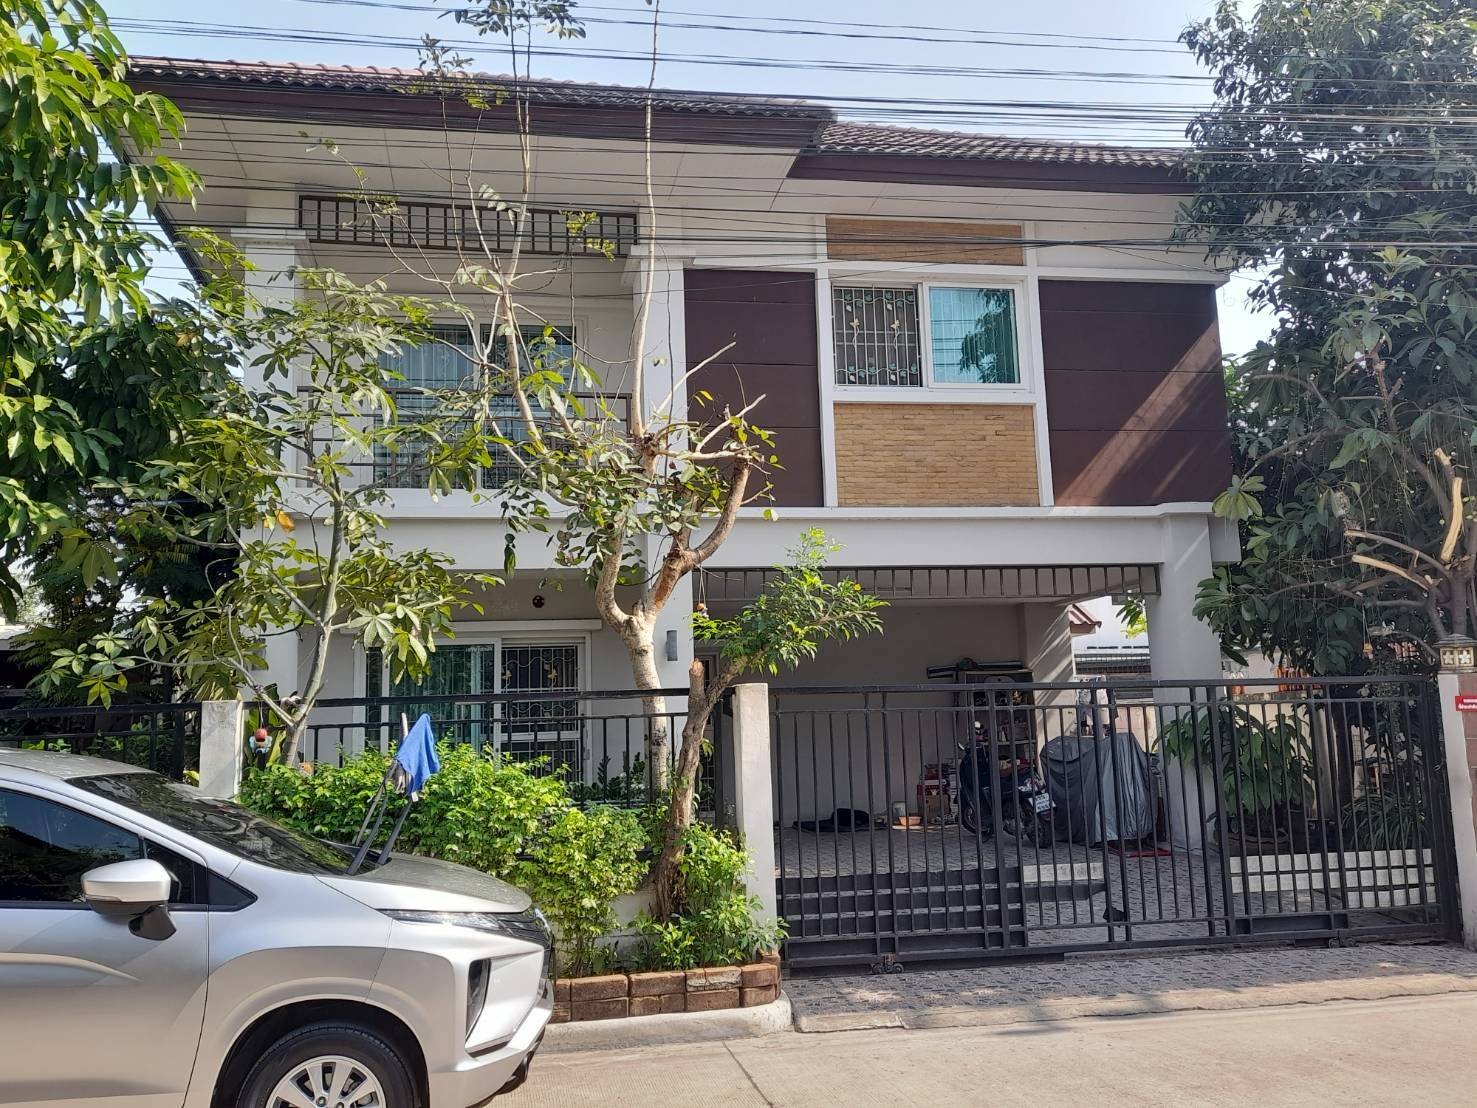 House for sale in Sai Noi !!!! House for sale in Term Rak 4 Bang Kruai-Sai Noi Road, area 50.3 sq wa, price 3.65 million baht, kitchen extension, ready to live, good location, distant future.